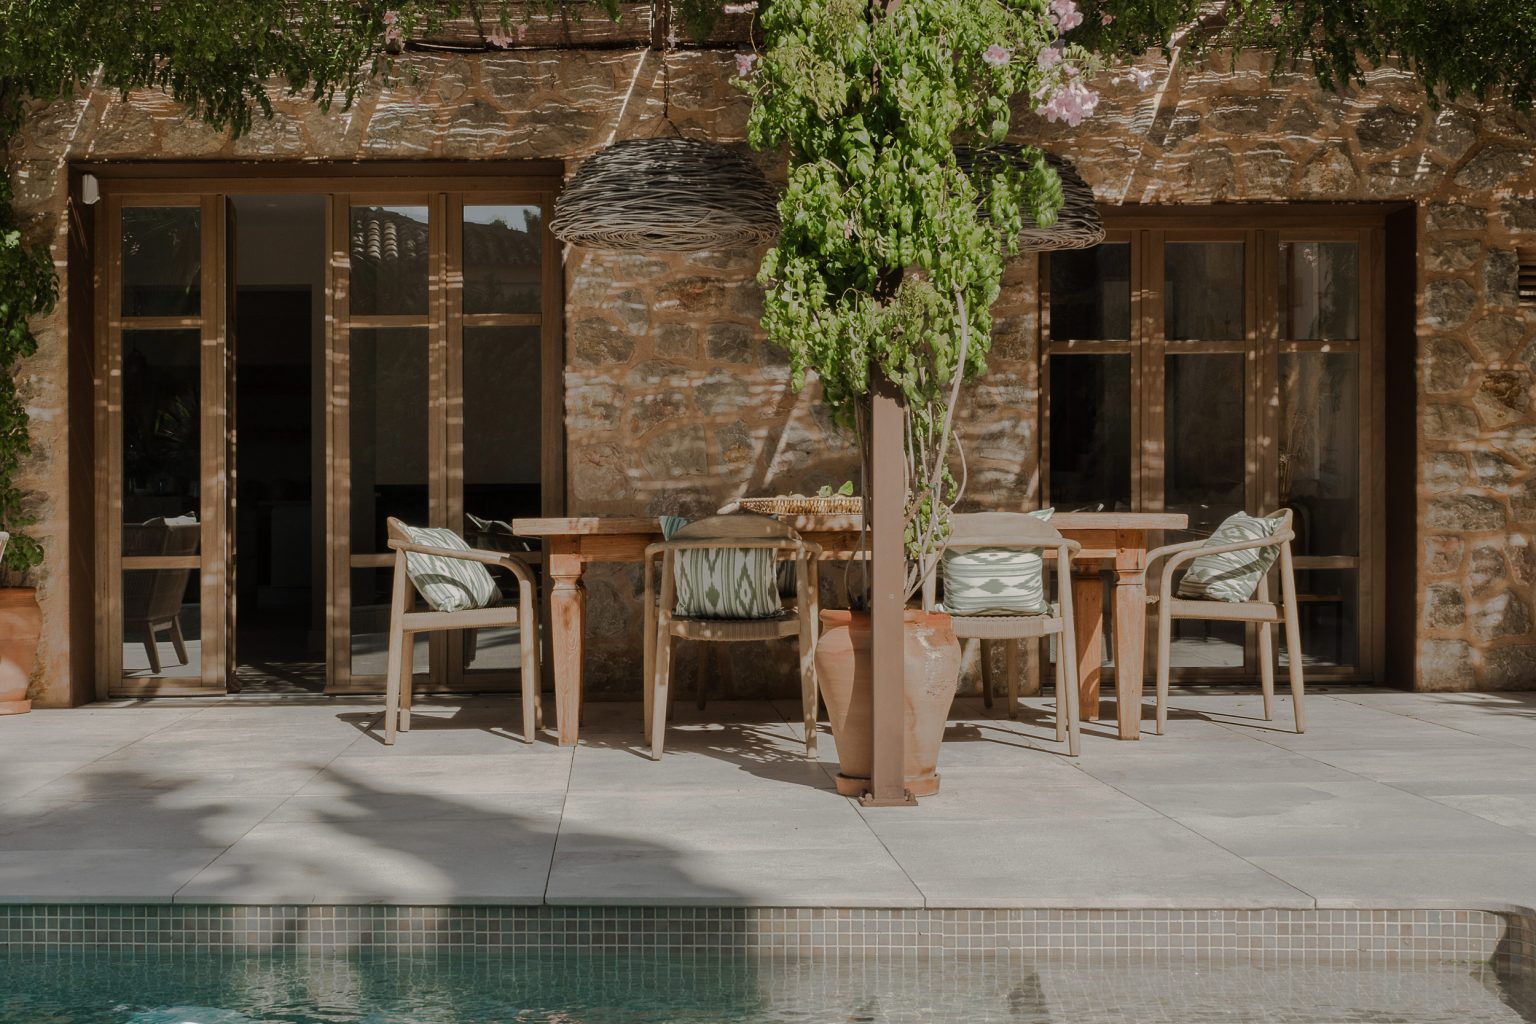 terrasse avec pergola métal maison méditerranéenne avec piscine